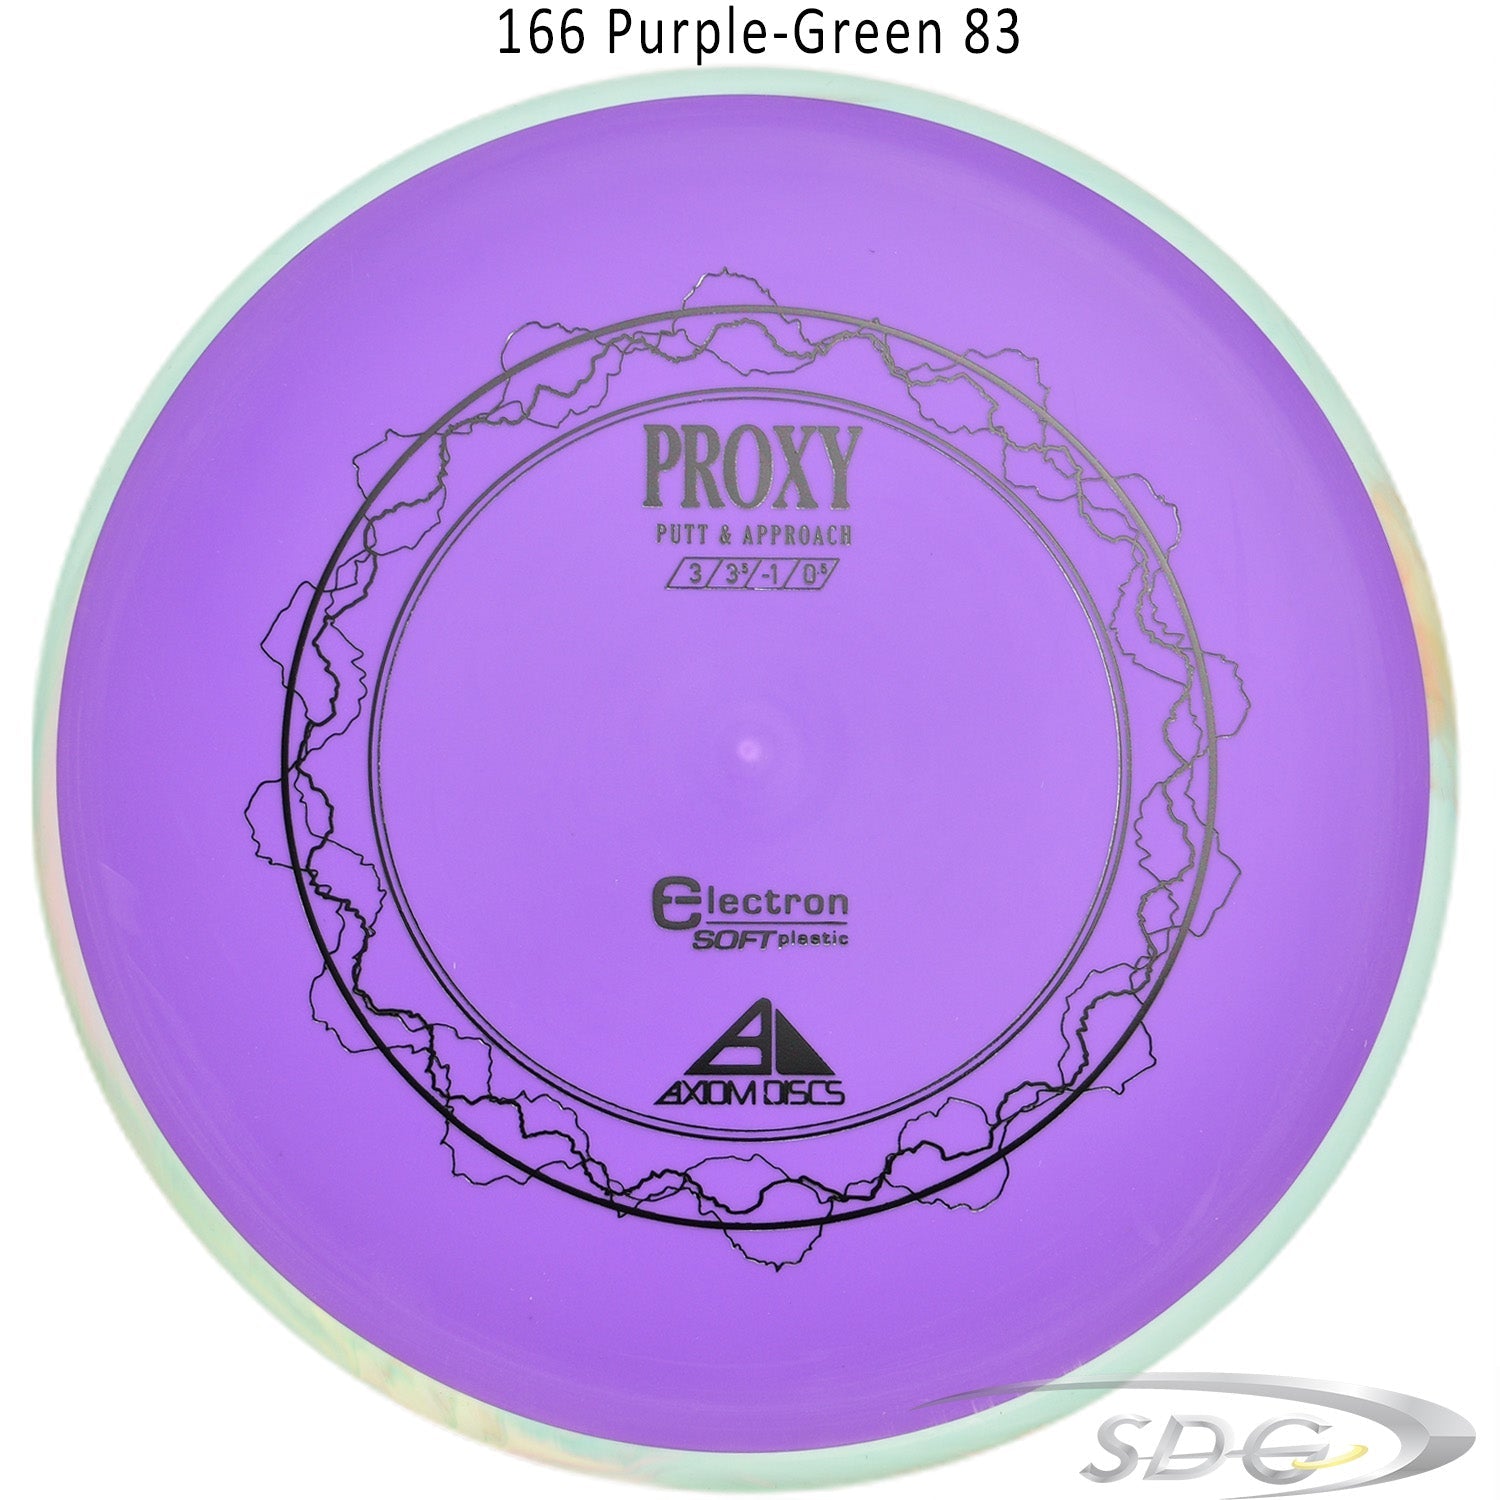 axiom-electron-proxy-soft-disc-golf-putt-approach 166 Purple-Green 83 